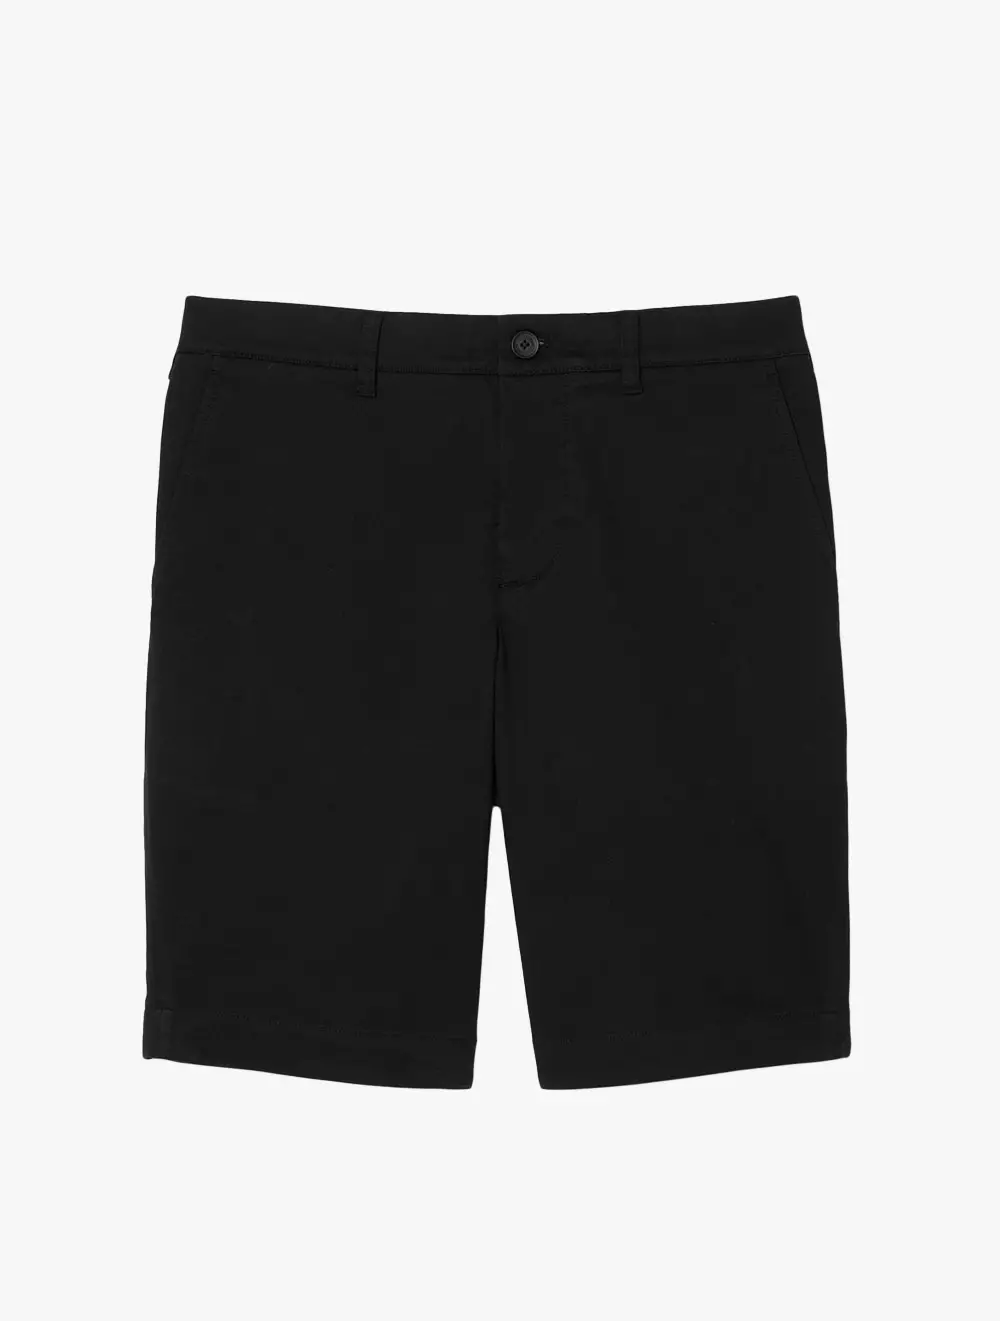 Jual Lacoste Men’s Lacoste Slim Fit Organic Cotton Bermuda Shorts ...